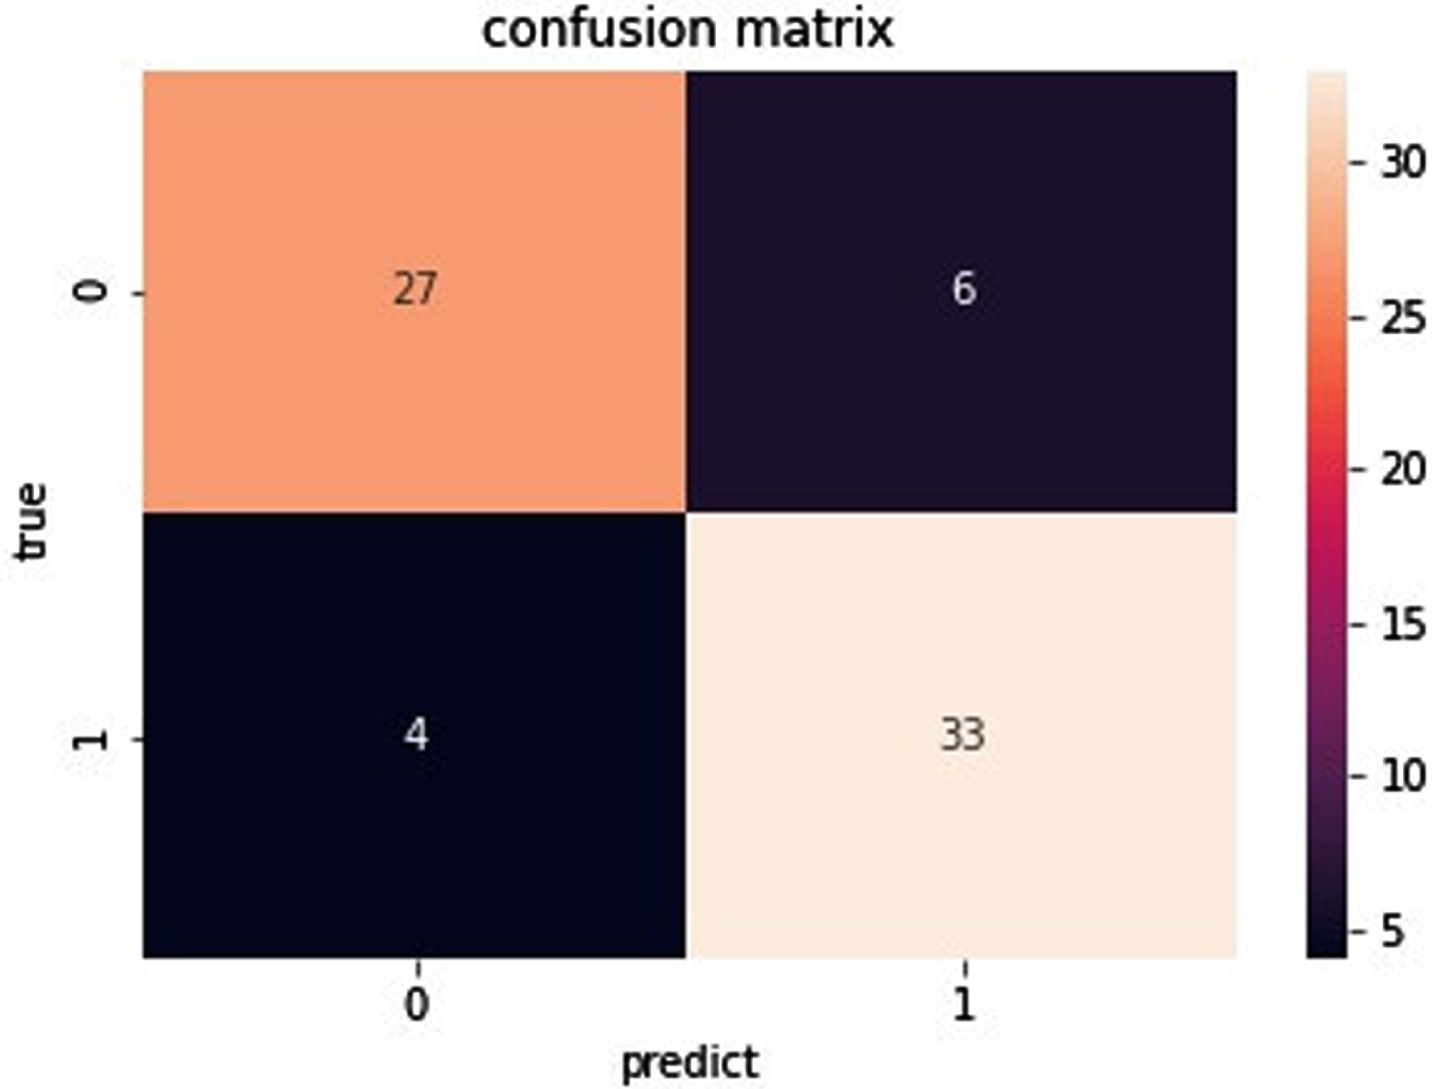 Confusion matrix of data set Sonar.